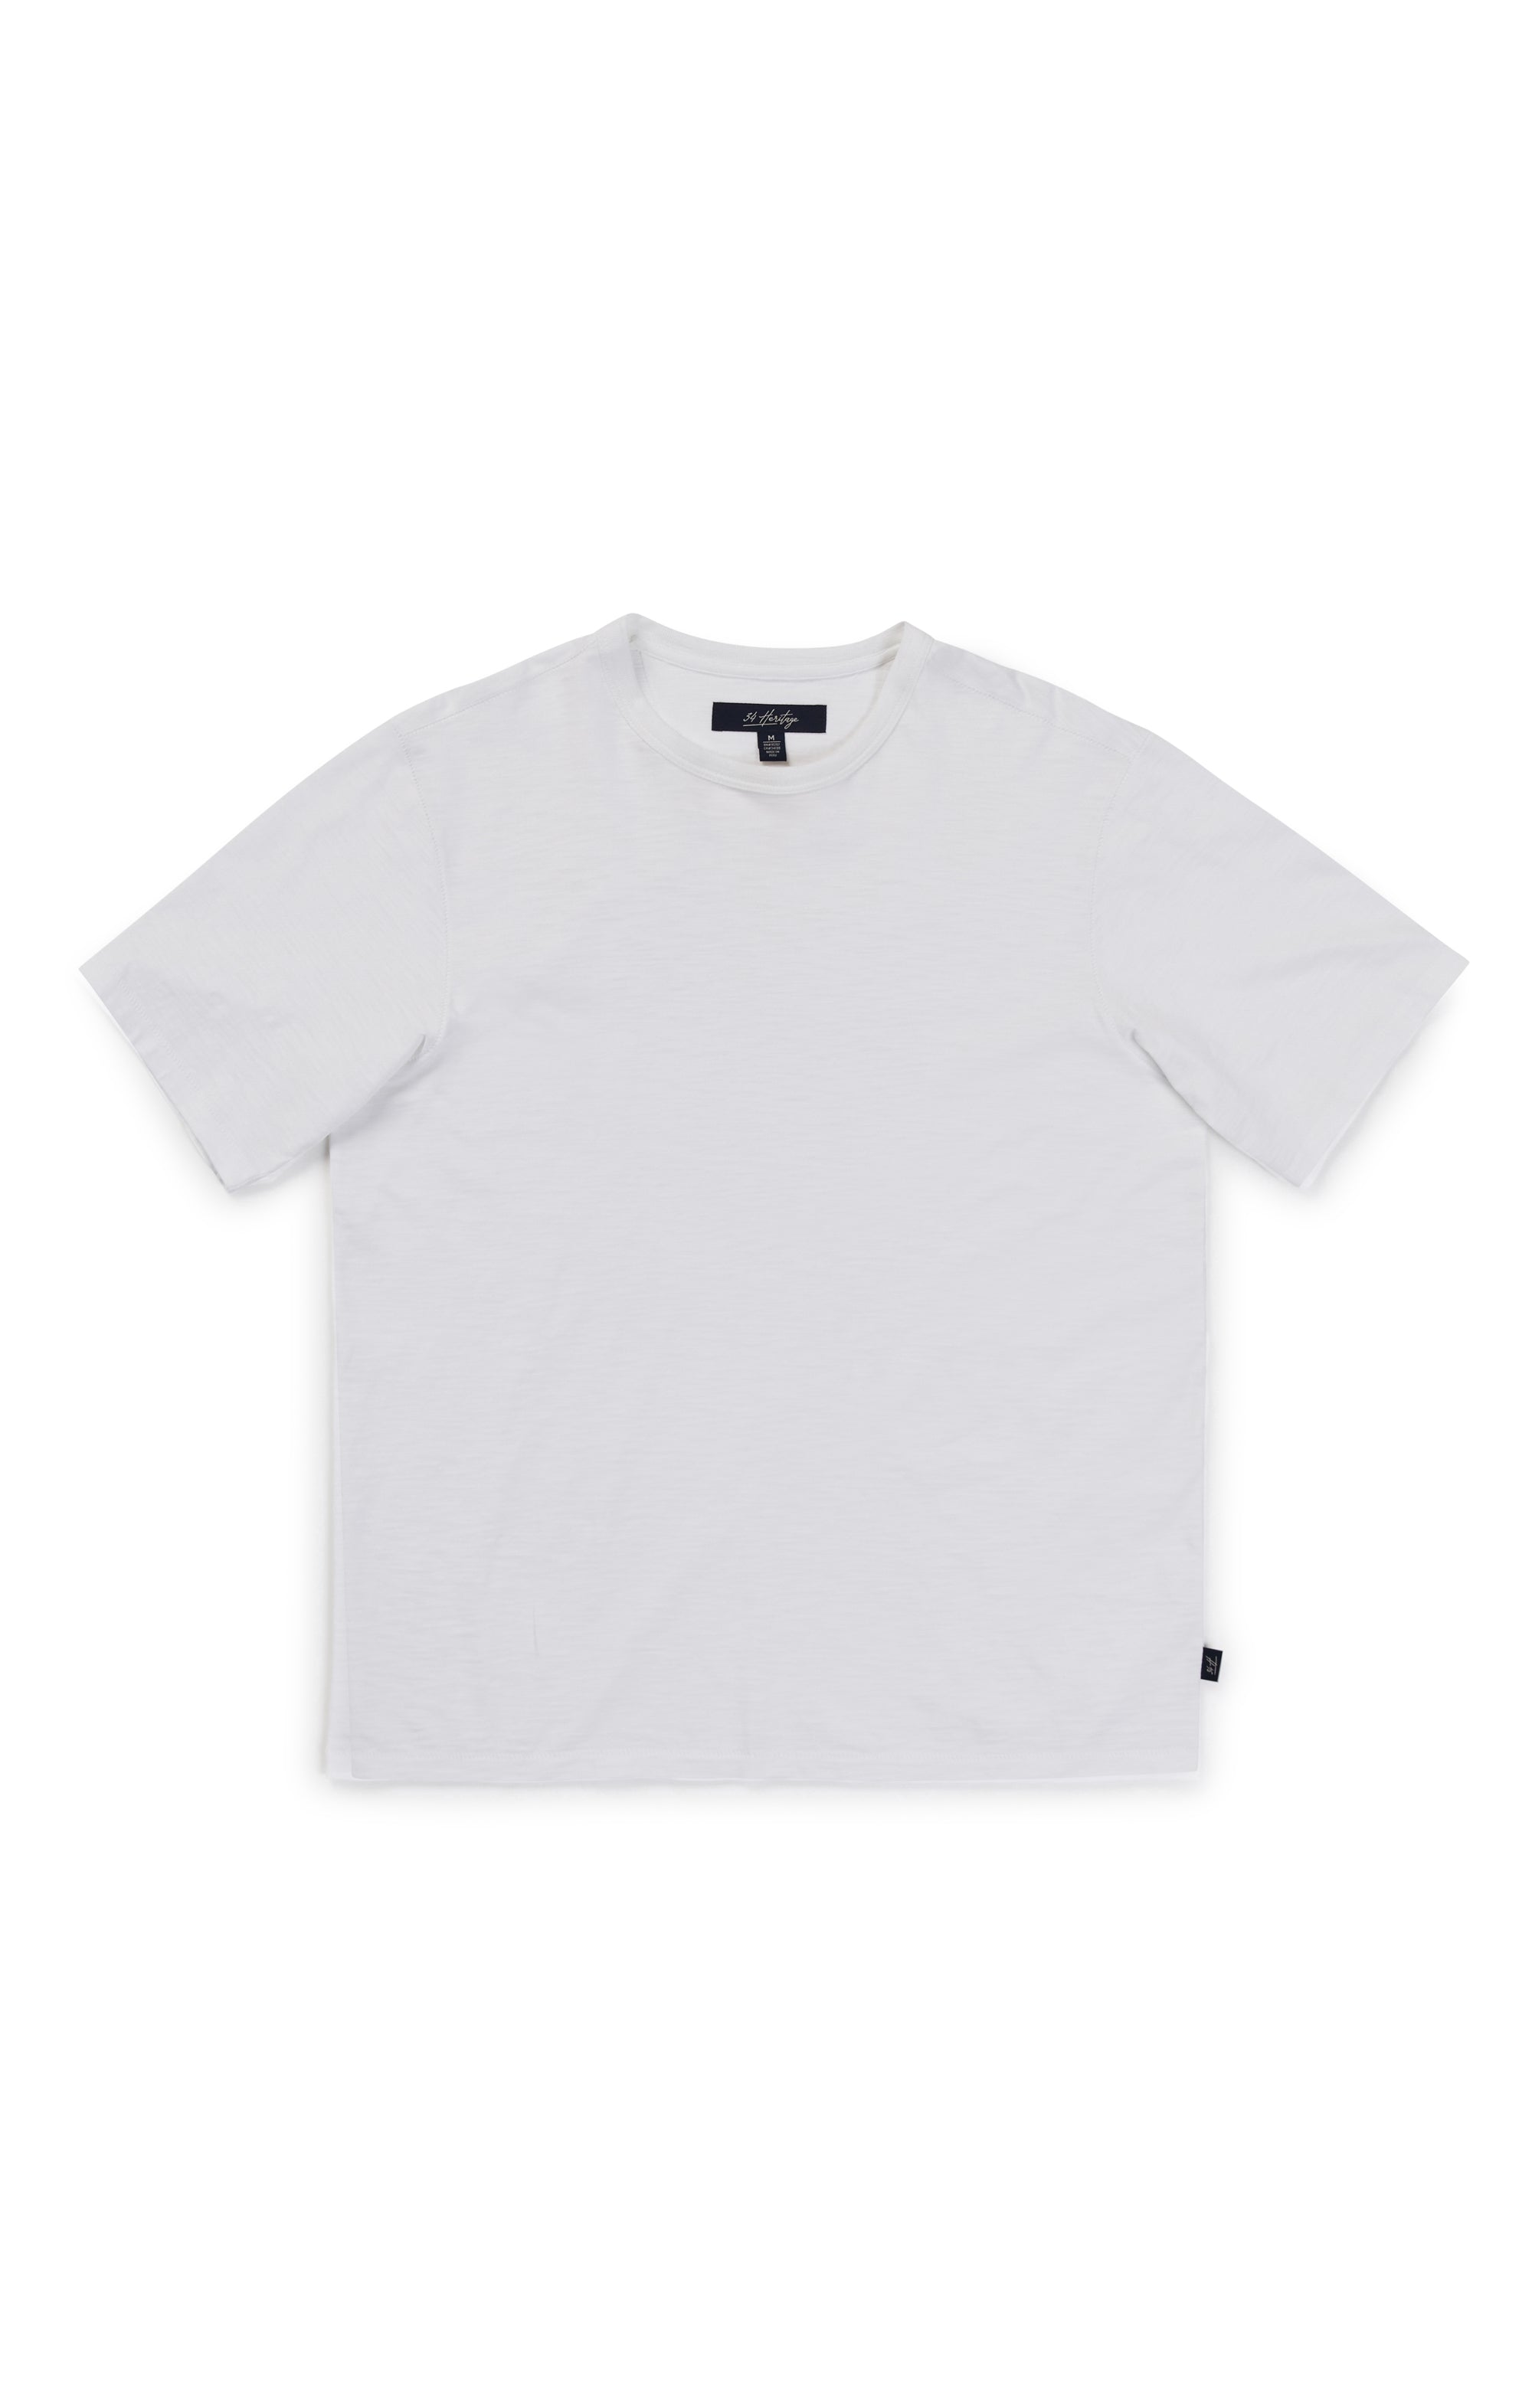 Slub Crew Neck T-Shirt in White Image 9